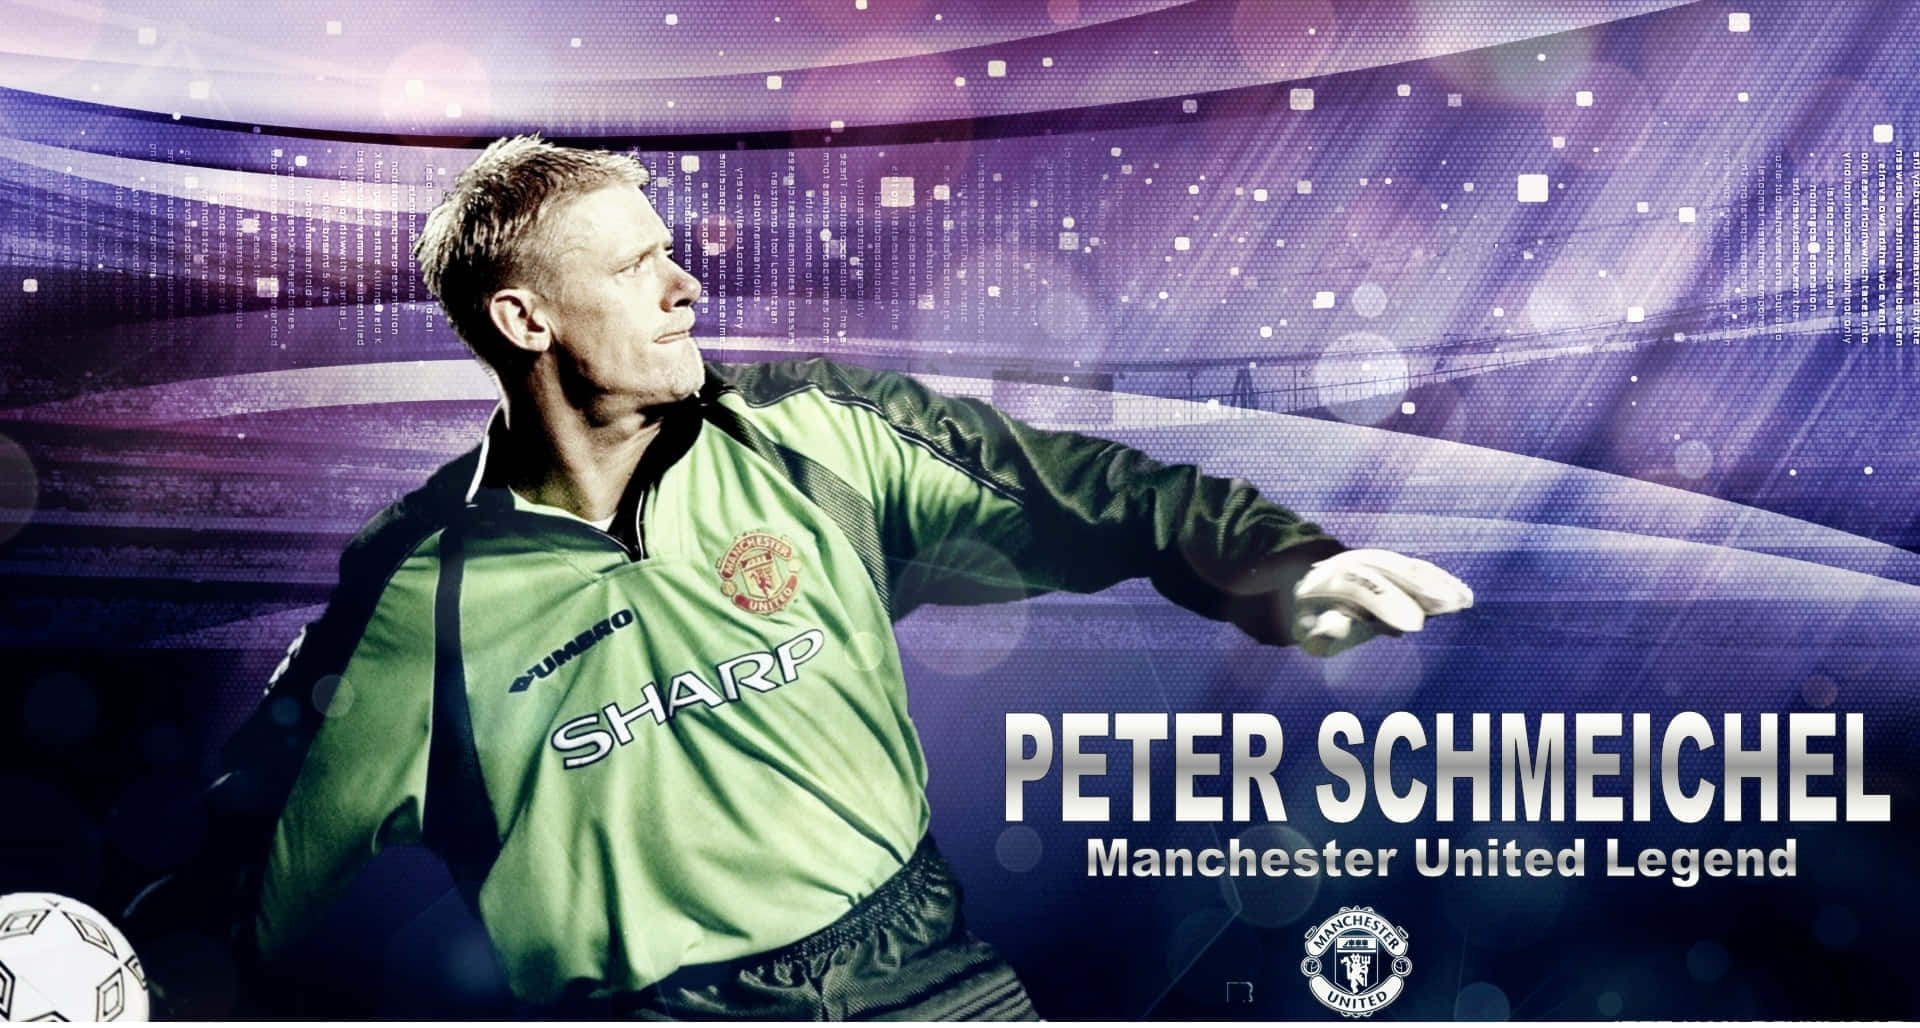 Peter Schmeichel Manchester United Legend Poster Wallpaper